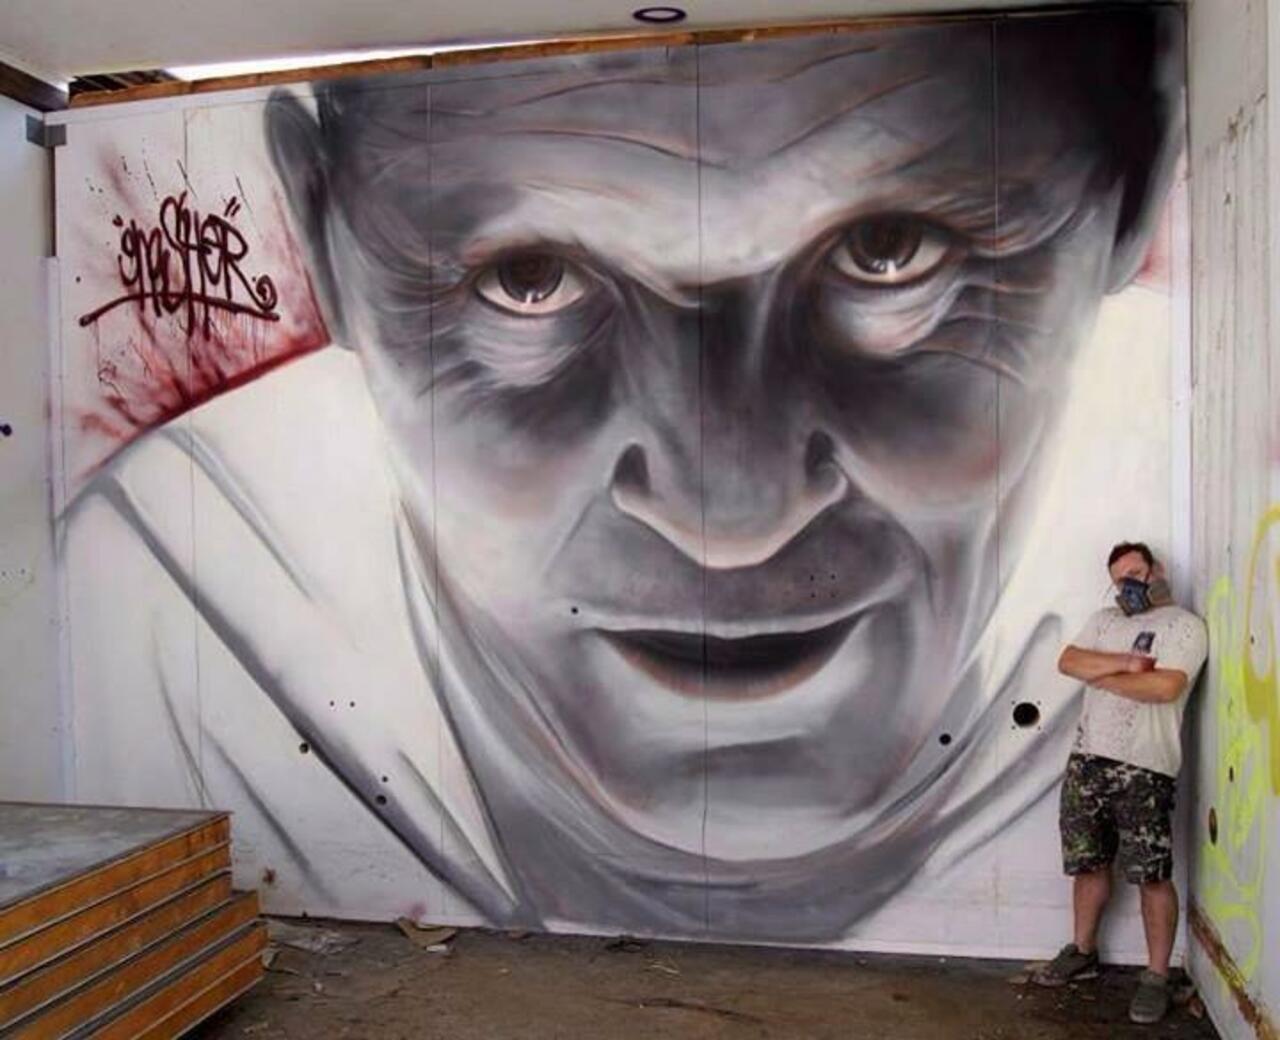 RT @BenWest: RT@designopinion: Artist @GnasherMurals awesome #StreetArt portrait of Dr. Lector #art #graffiti #mural http://t.co/mXwbnhNTXq"